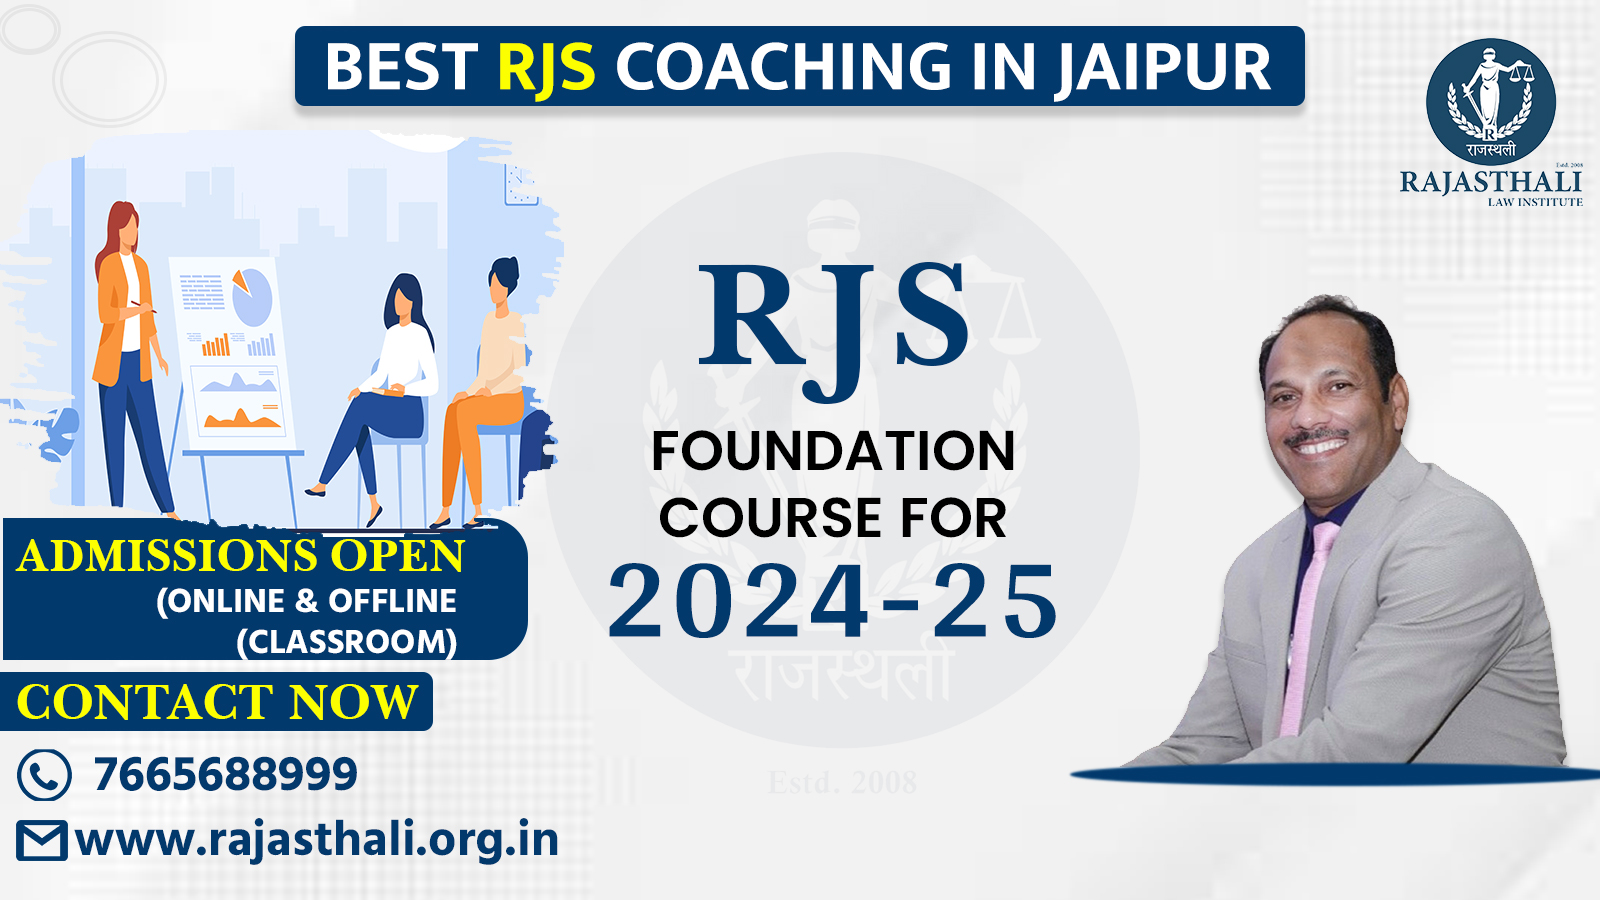 Best RJS Coaching In Jaipur 